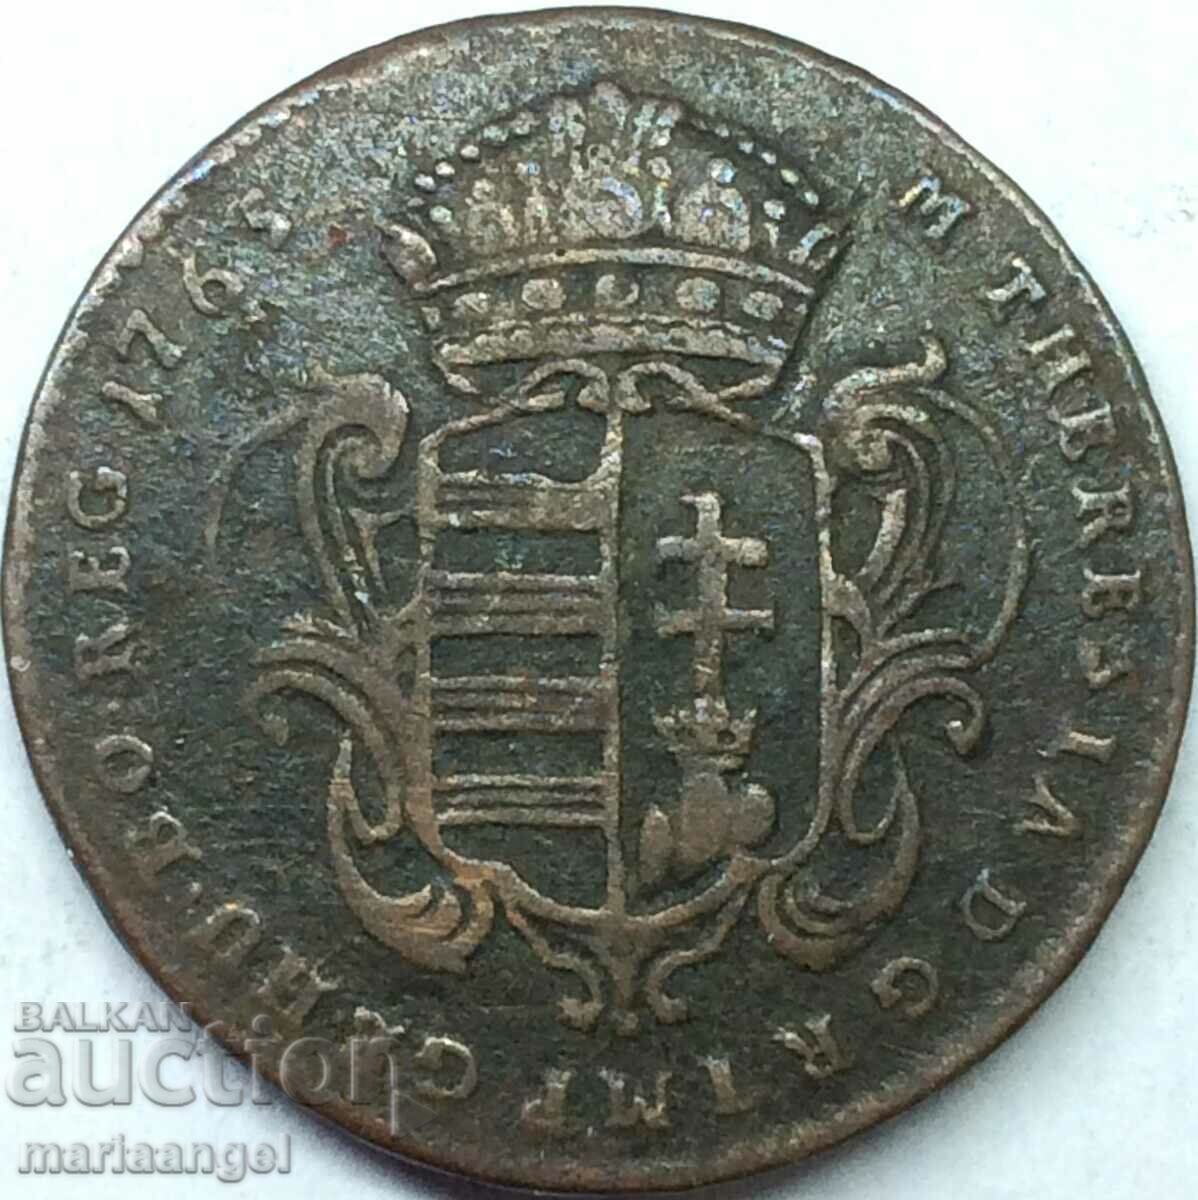 Hungary 1 denar 1765 Austria M. Theresia - rare